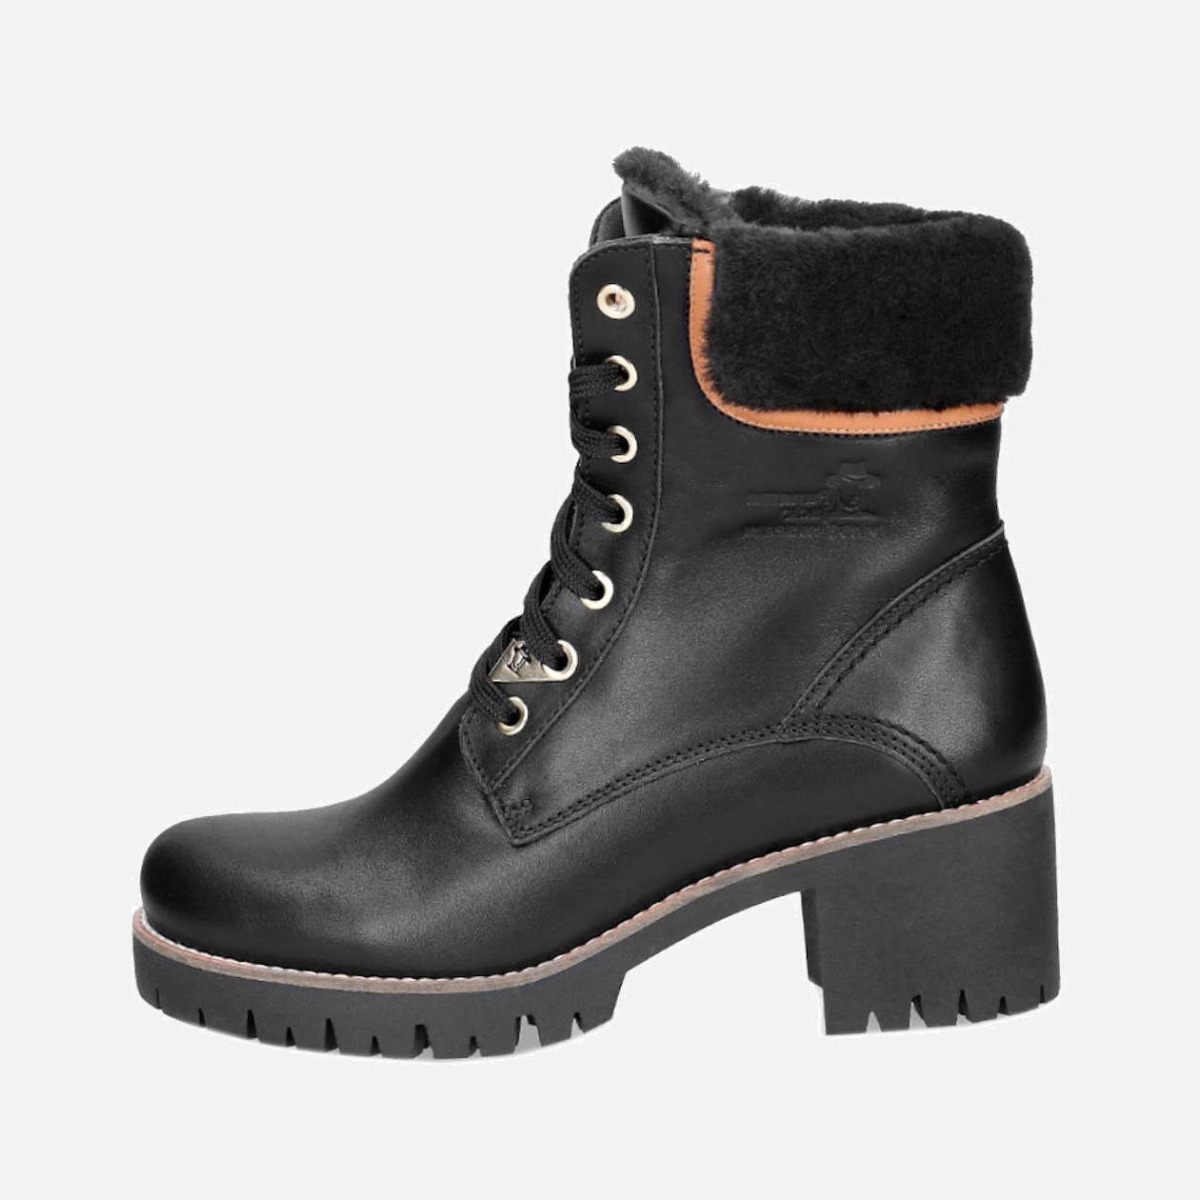 panama jack fur lined boots